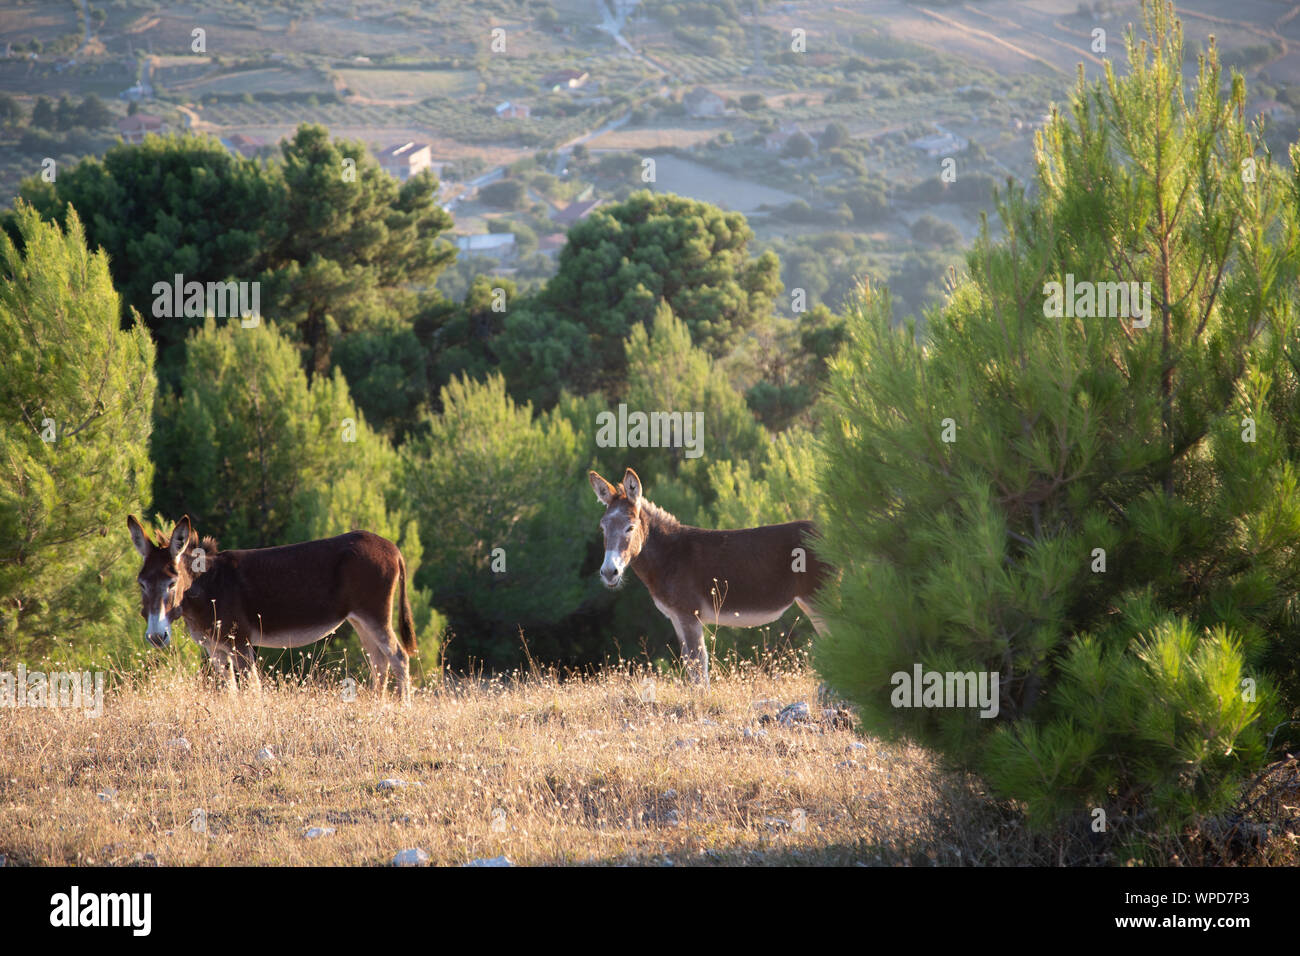 Couple of Donkeys on hills of Sicily Stock Photo